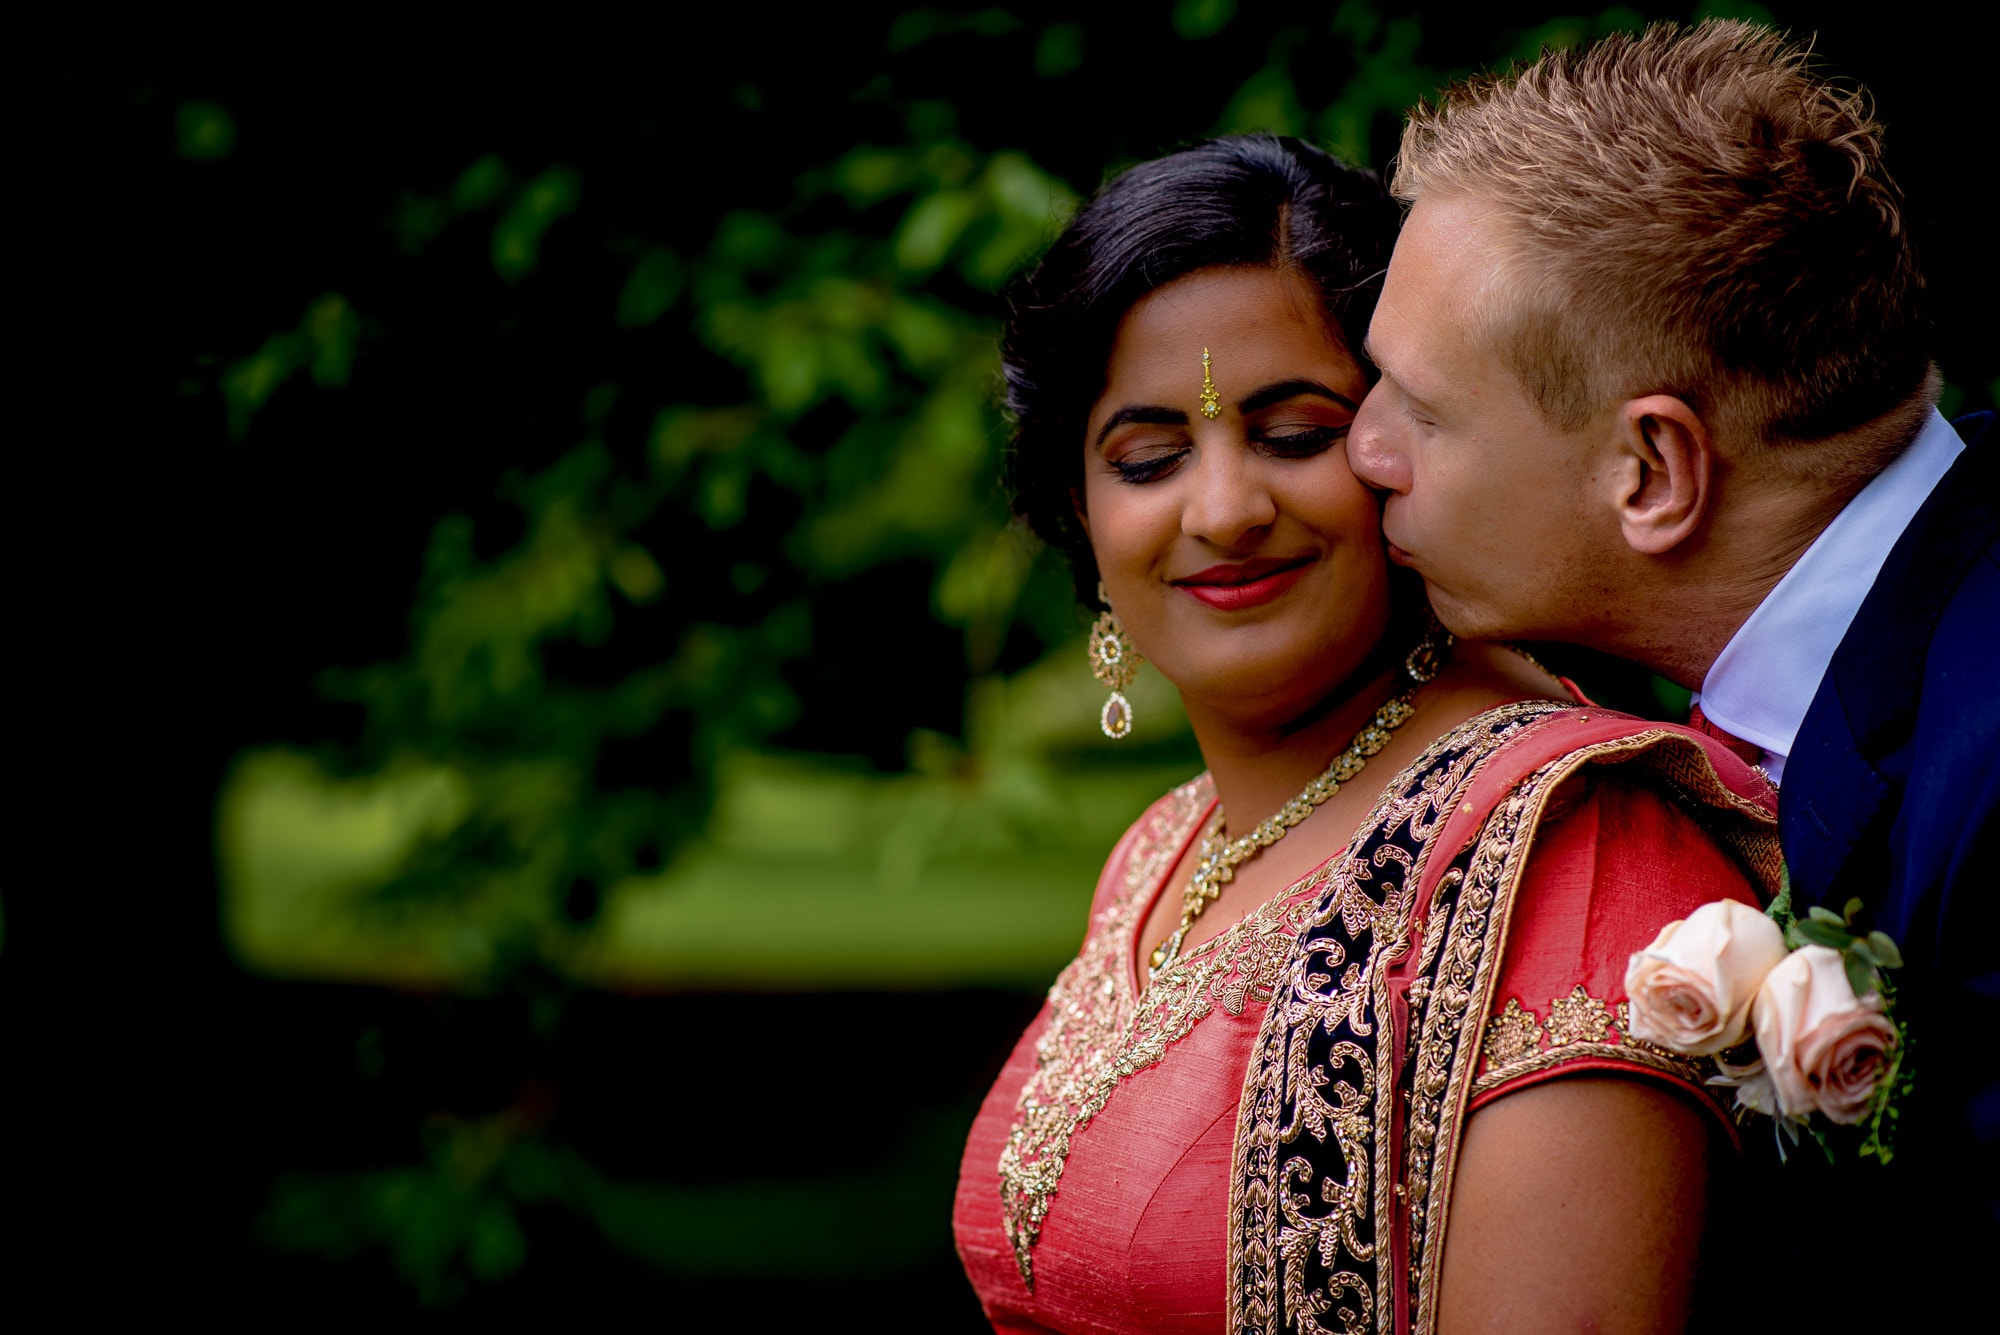 Cambridge Wedding Photographer - The Importance of Bride and Groom Portraits